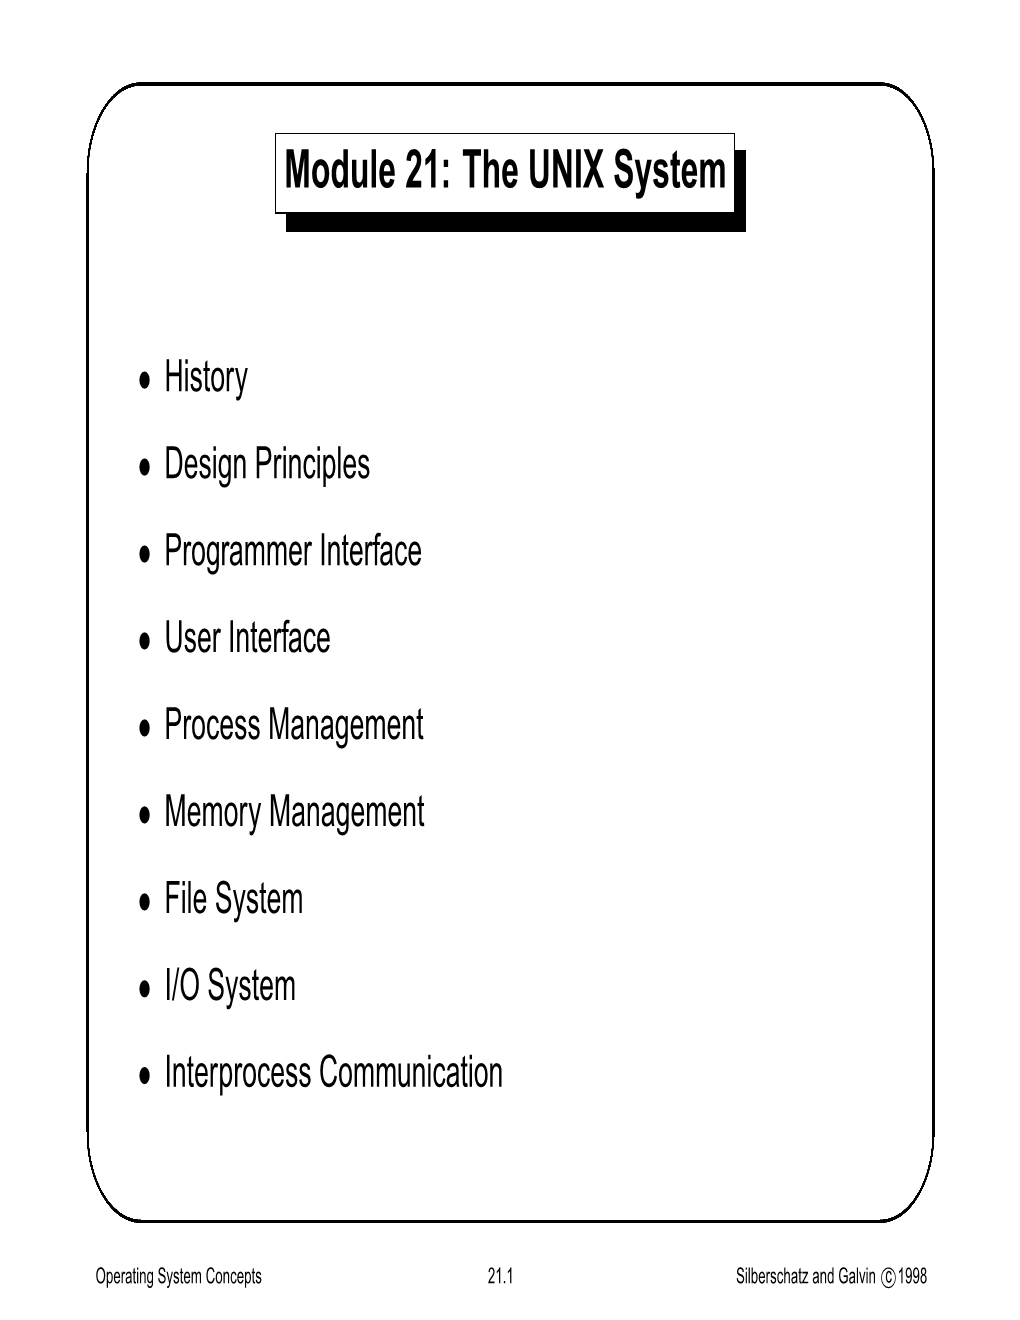 Module 21: the UNIX System